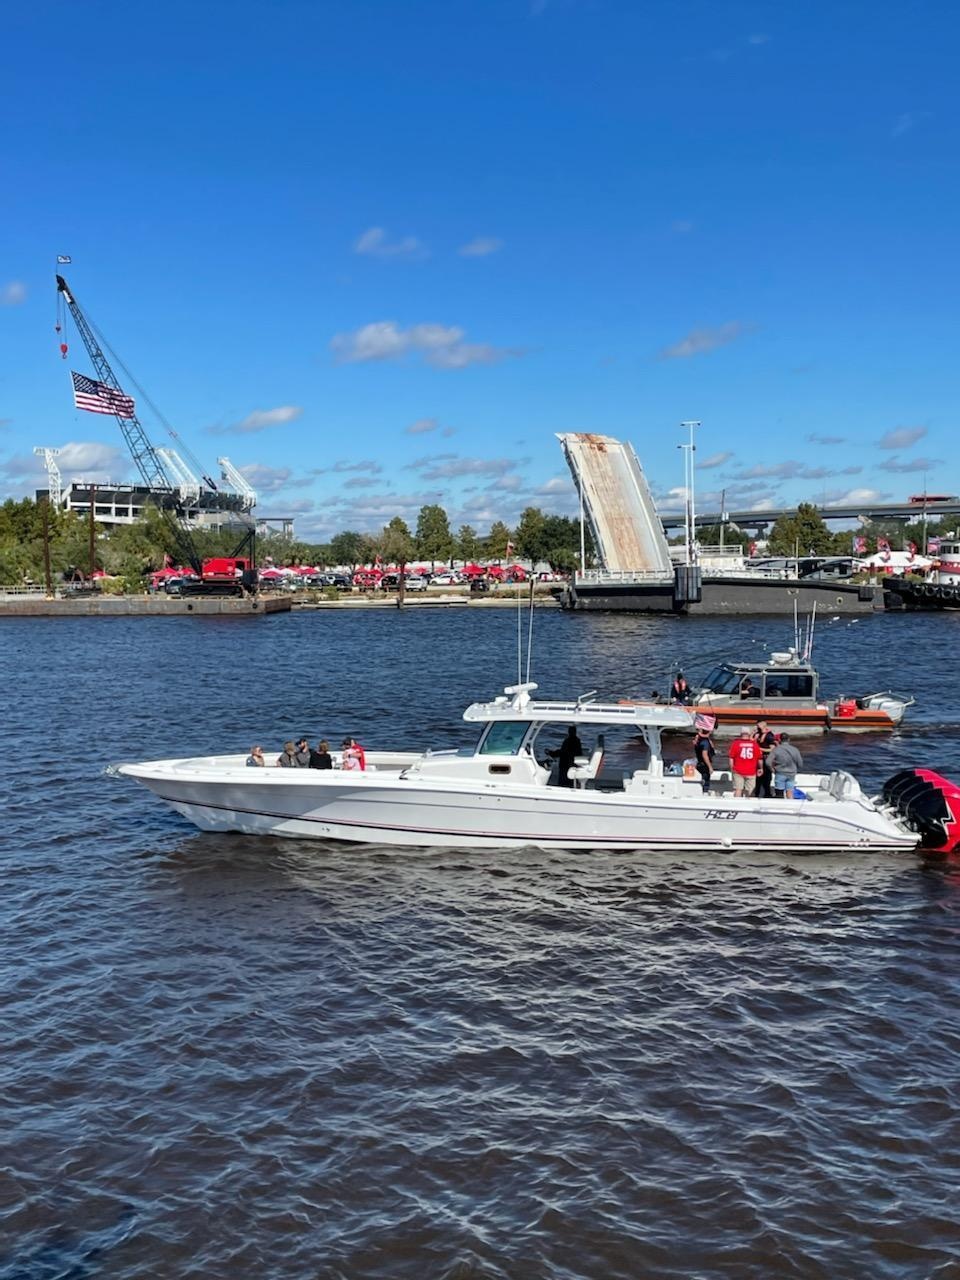 Coast Guard terminates illegal charter on St. Johns River